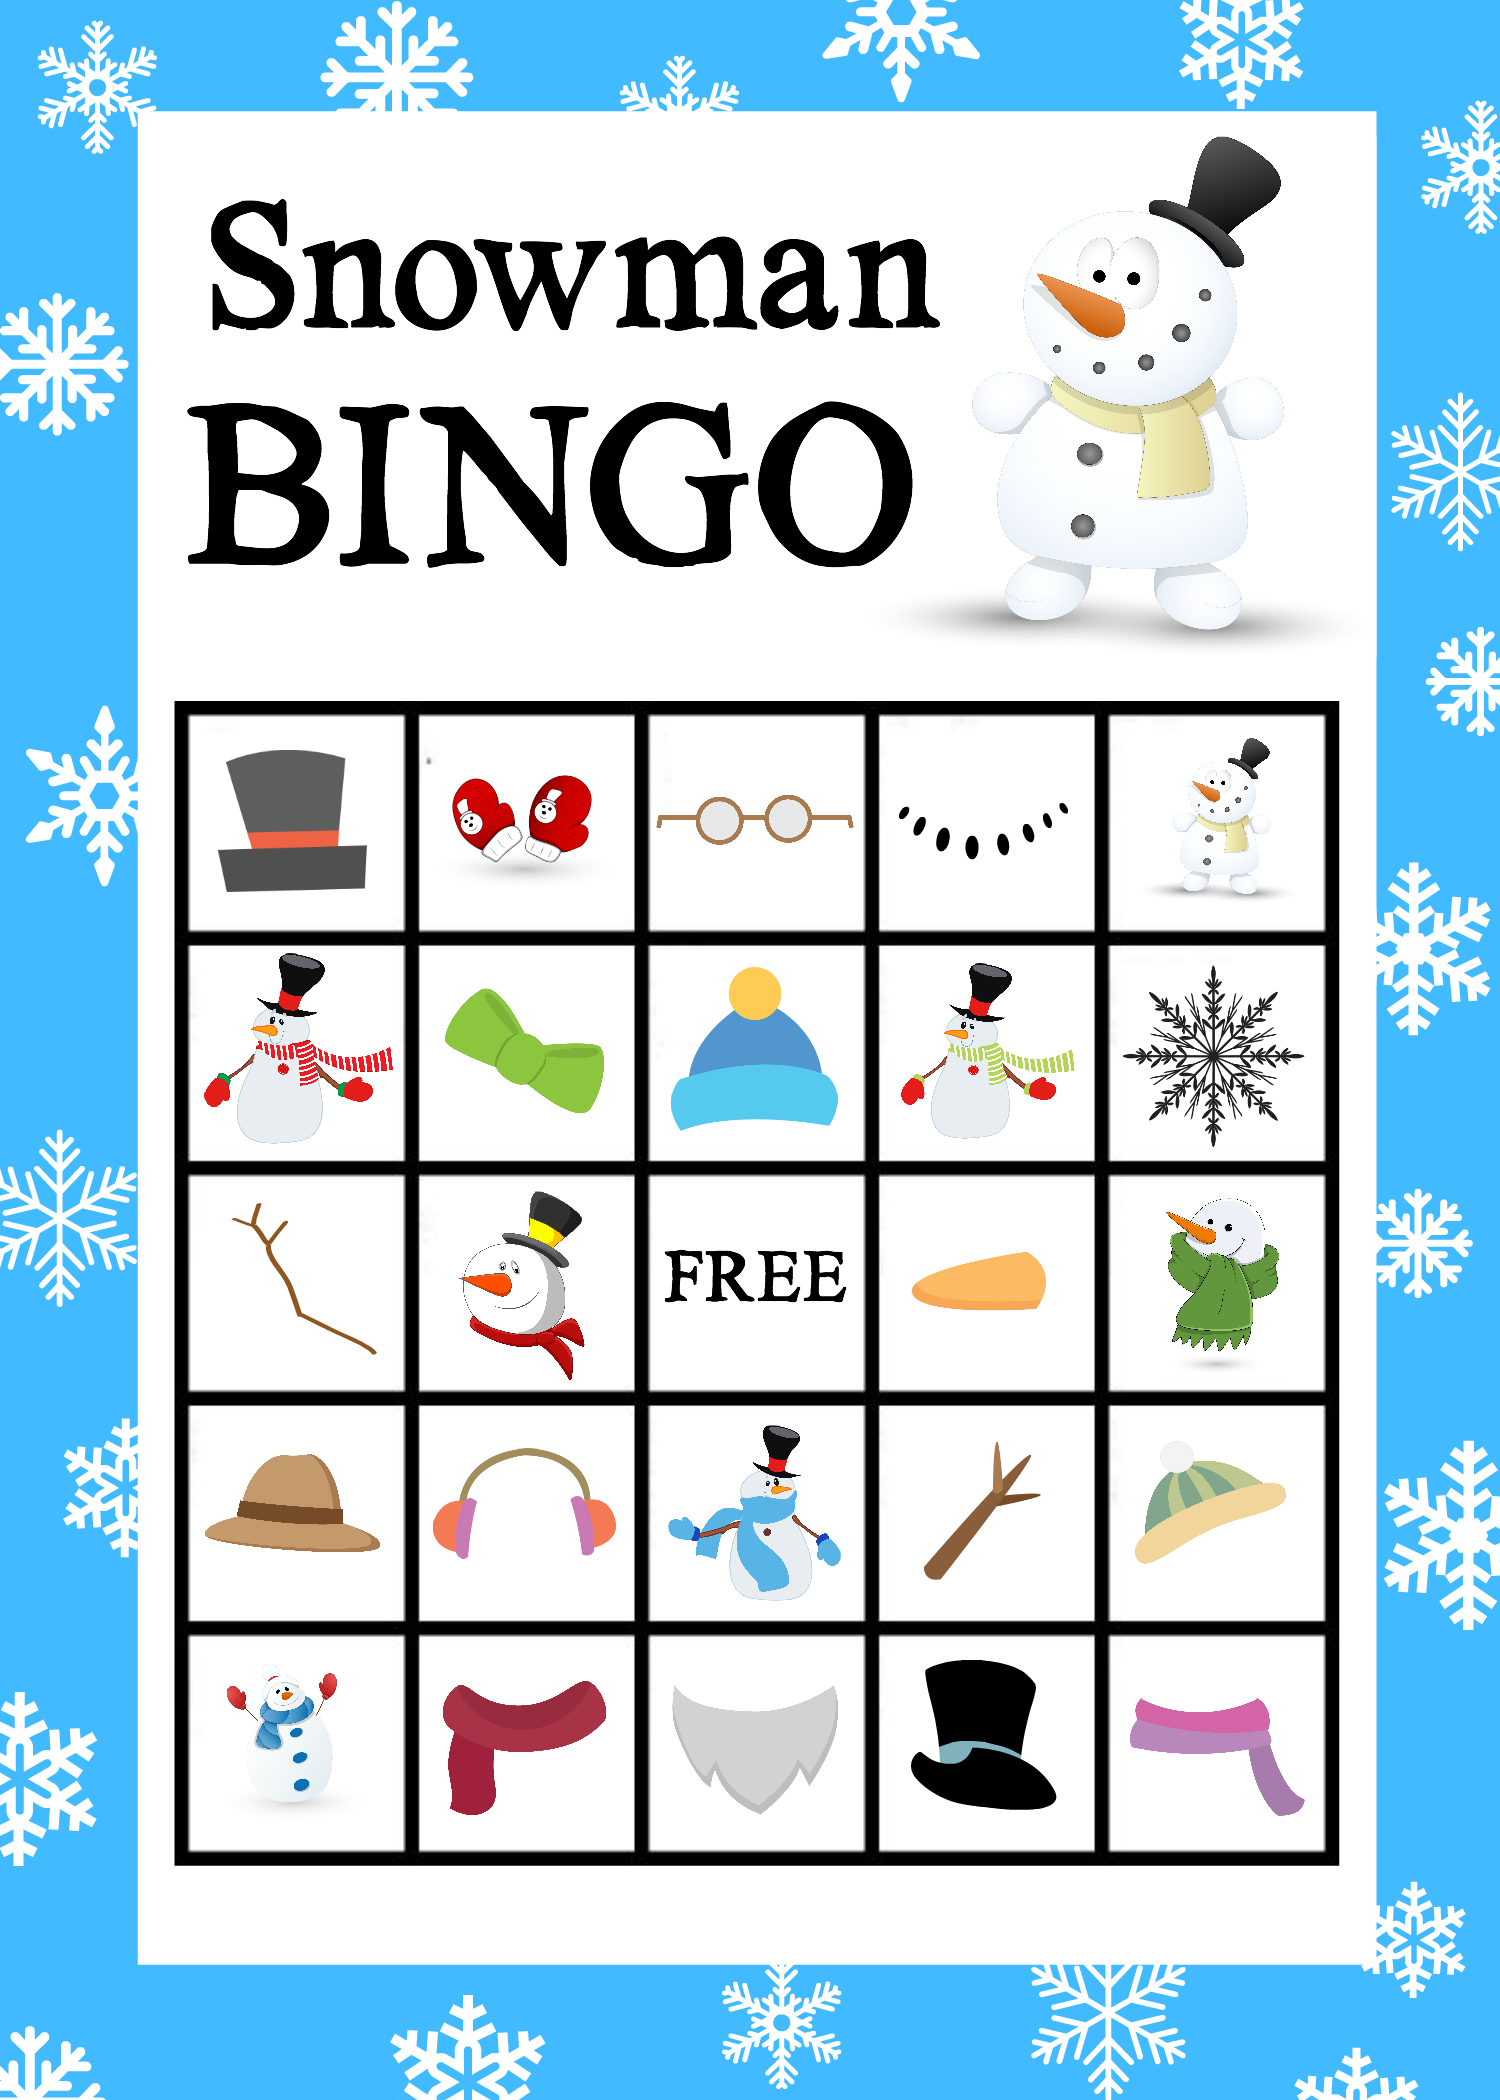 Printable Snowman Bingo Game - Crazy Little Projects - Free Bingo Patterns Printable